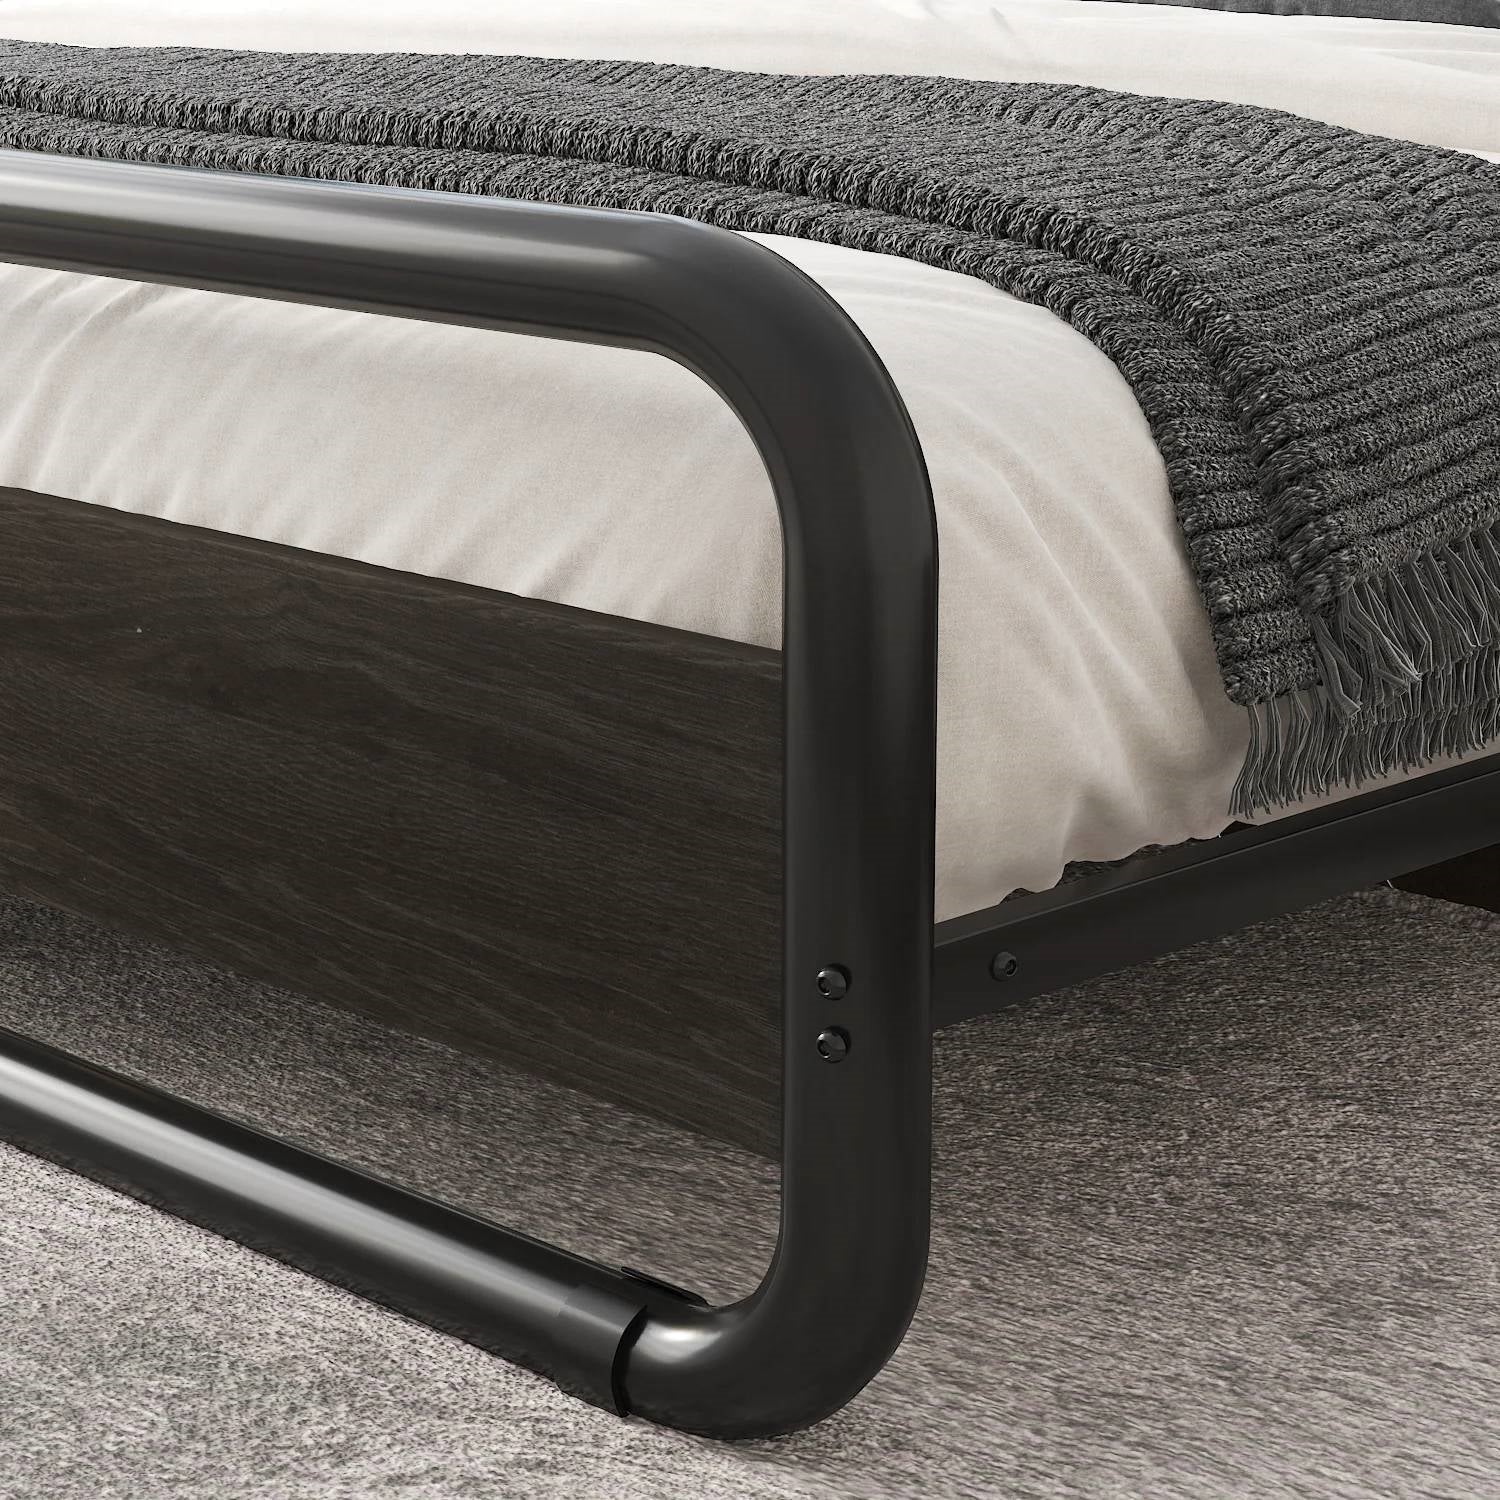 Bedroom > Bed Frames > Platform Beds - Queen Heavy Duty Round Metal Frame Platform Bed With Black Wood Panel Headboard